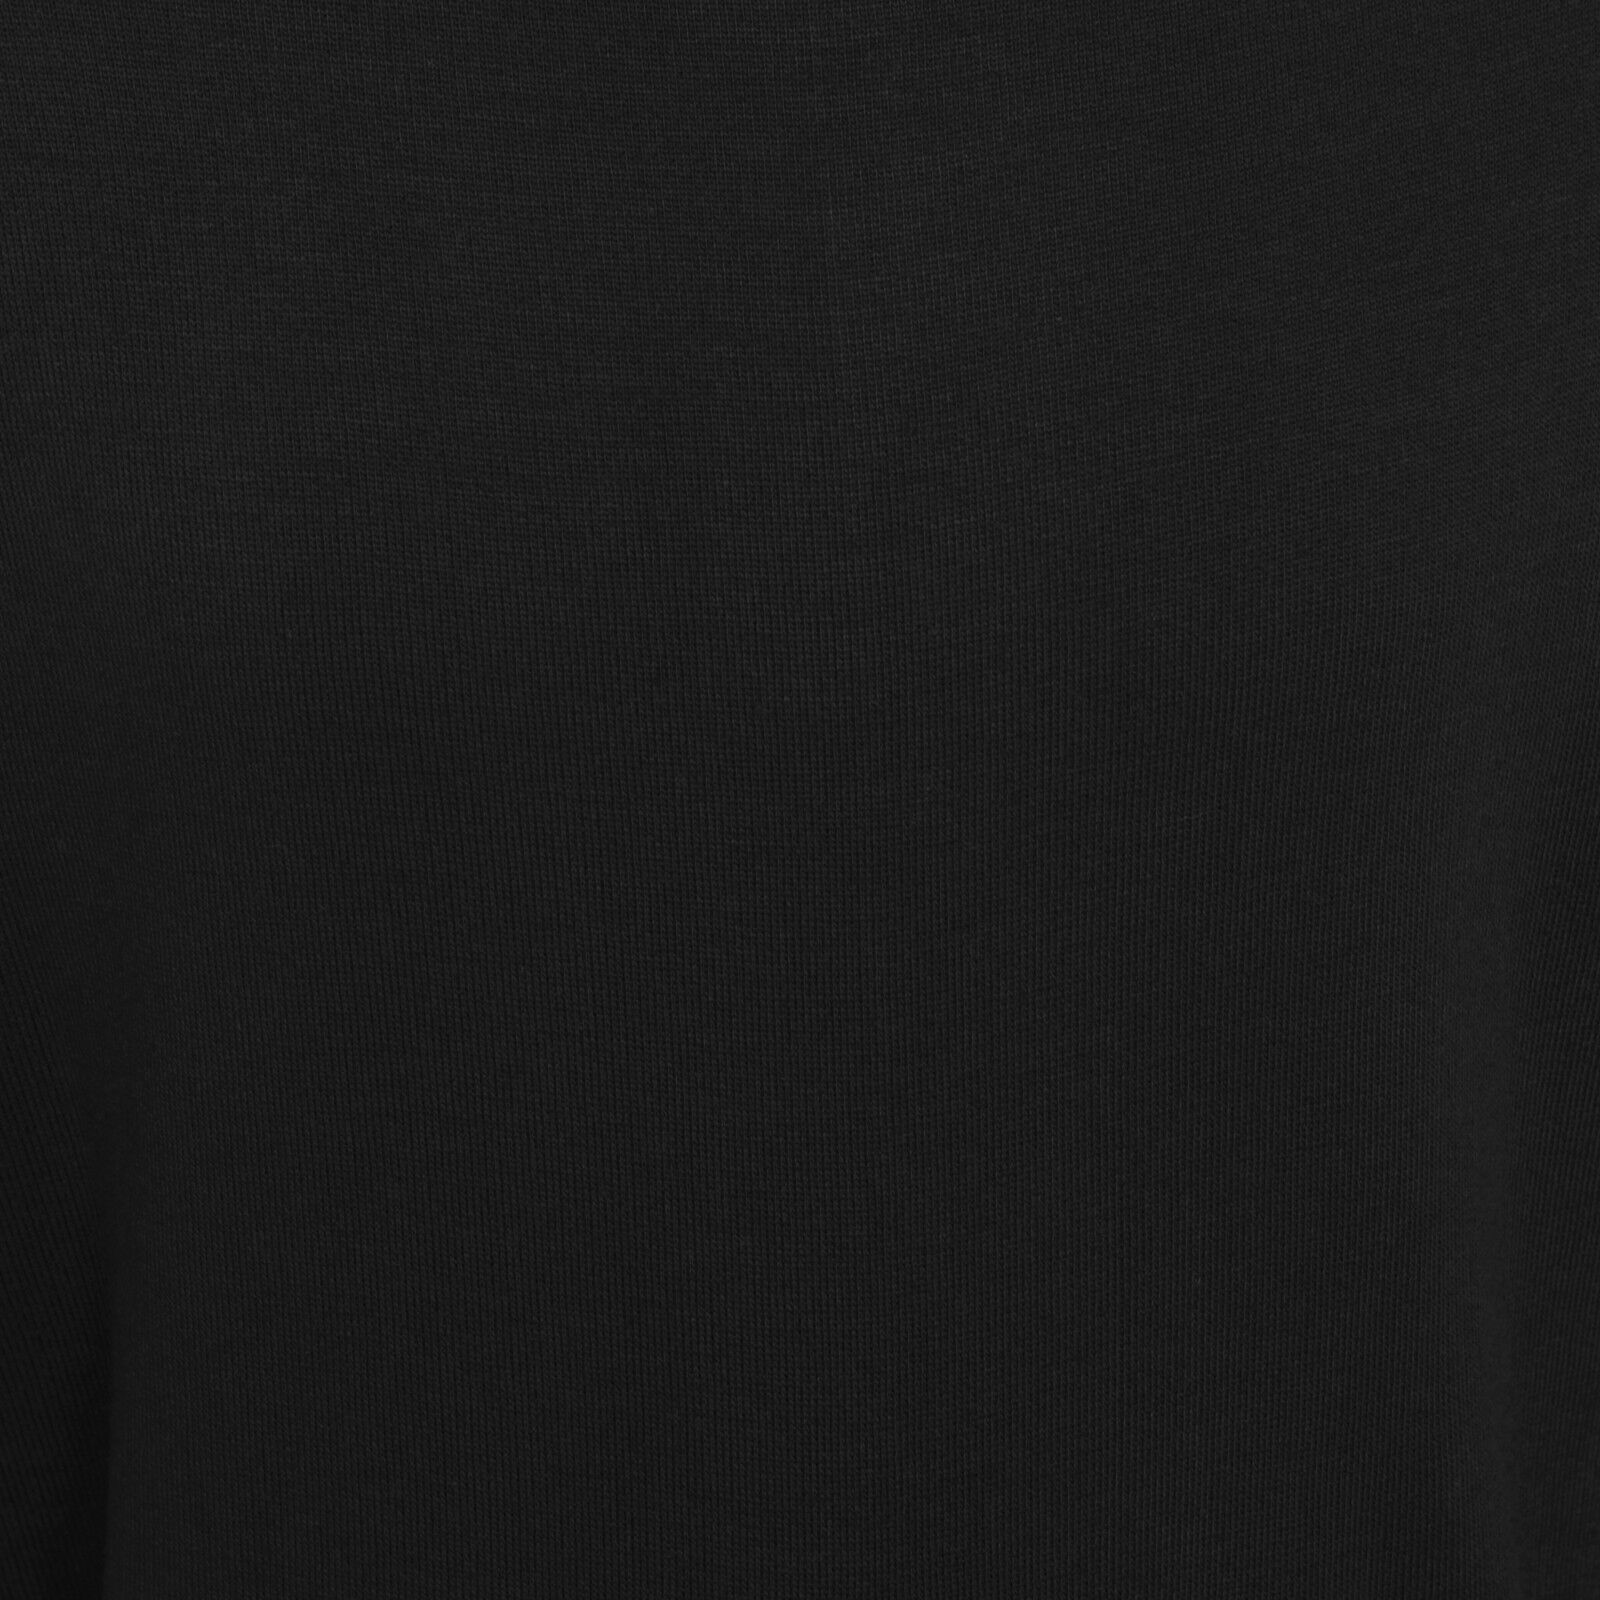 Kids Children Unisex School Uniform Plain Fleece Sweat Jumper Pullover -Black